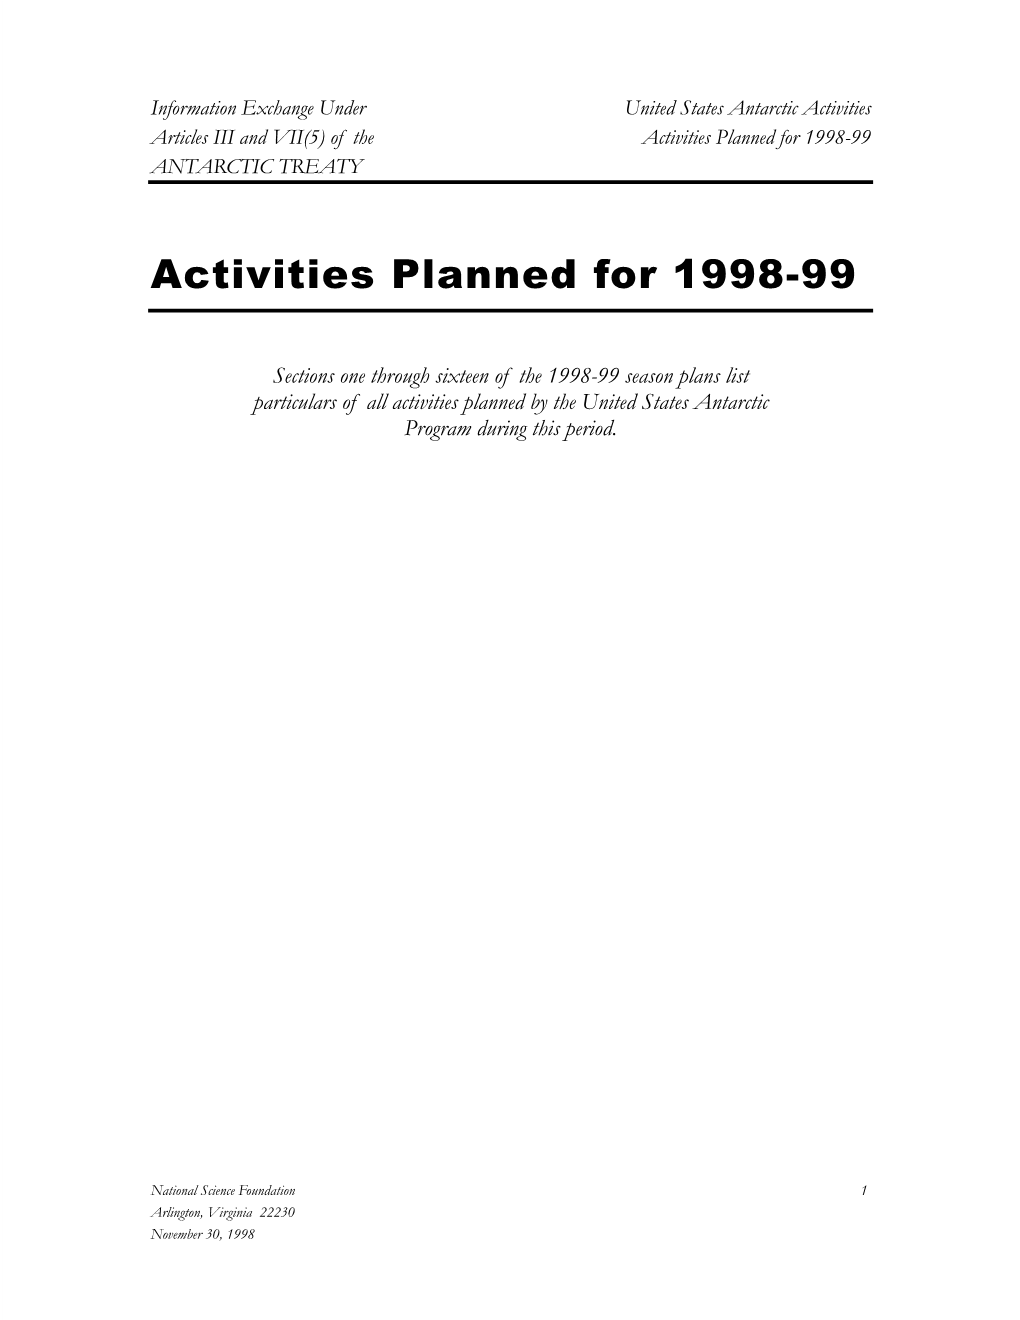 1998-99 Plans